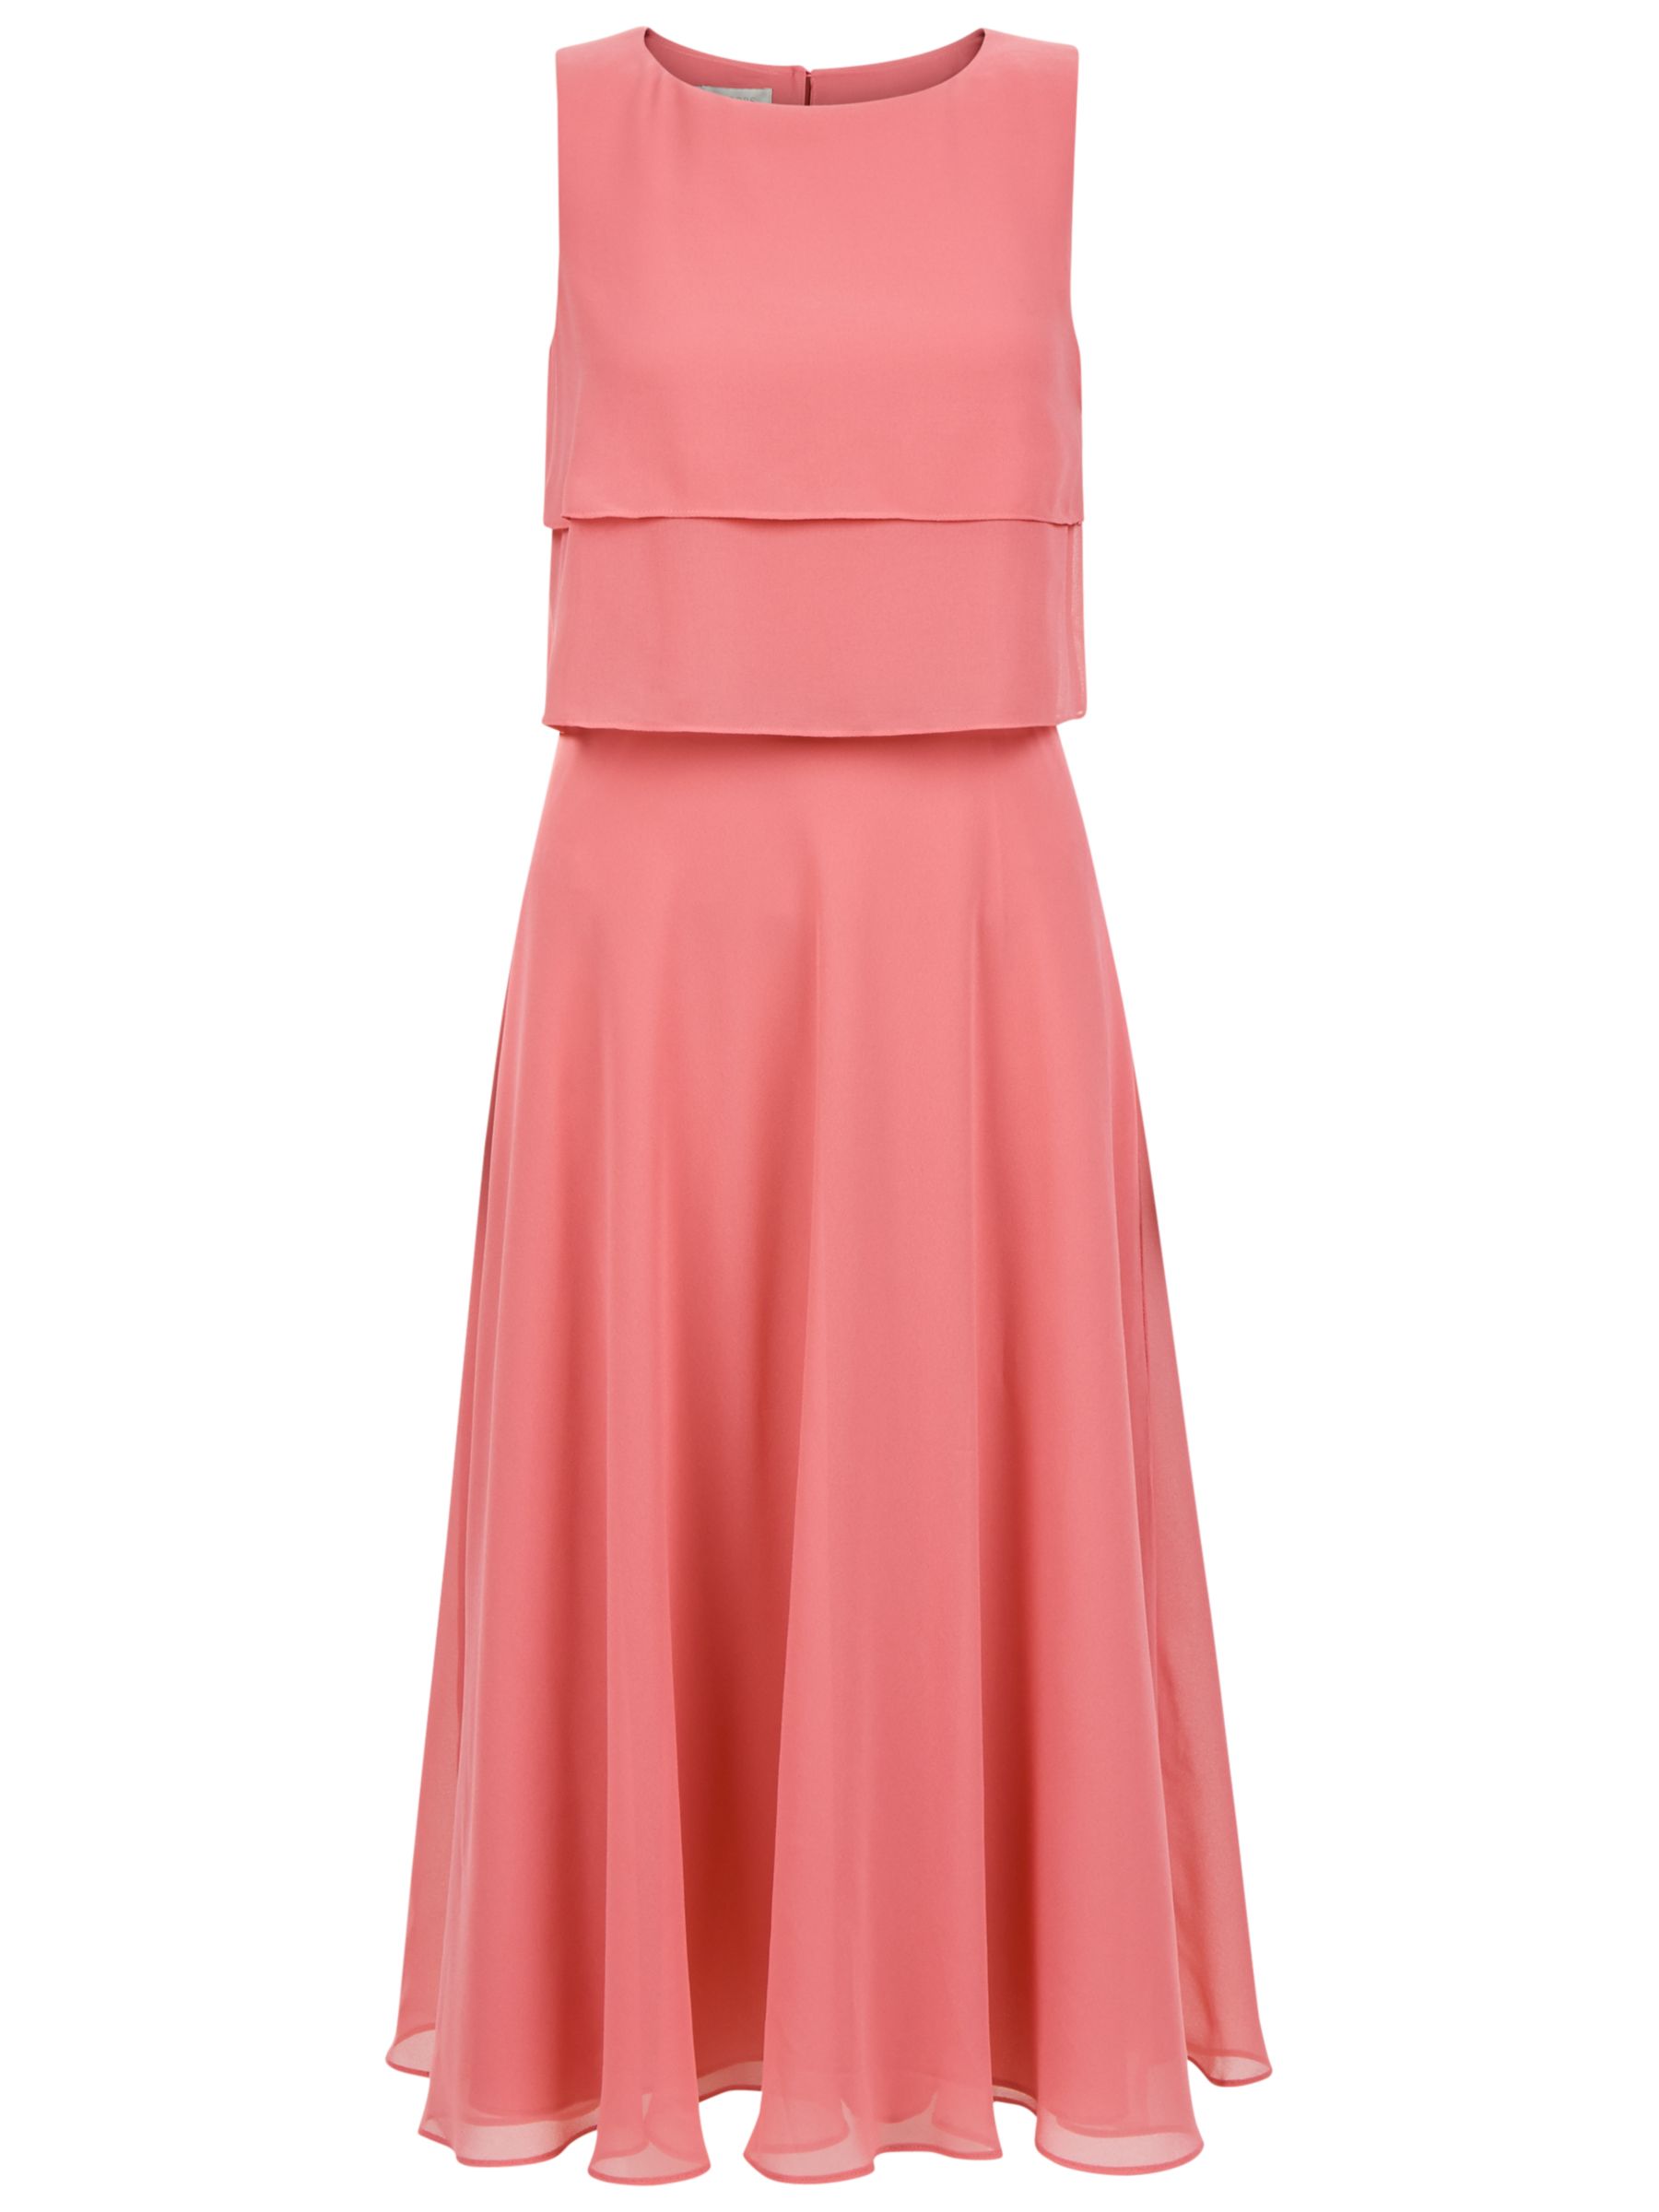 Hobbs Imogen Dress, Confetti Pink, 8